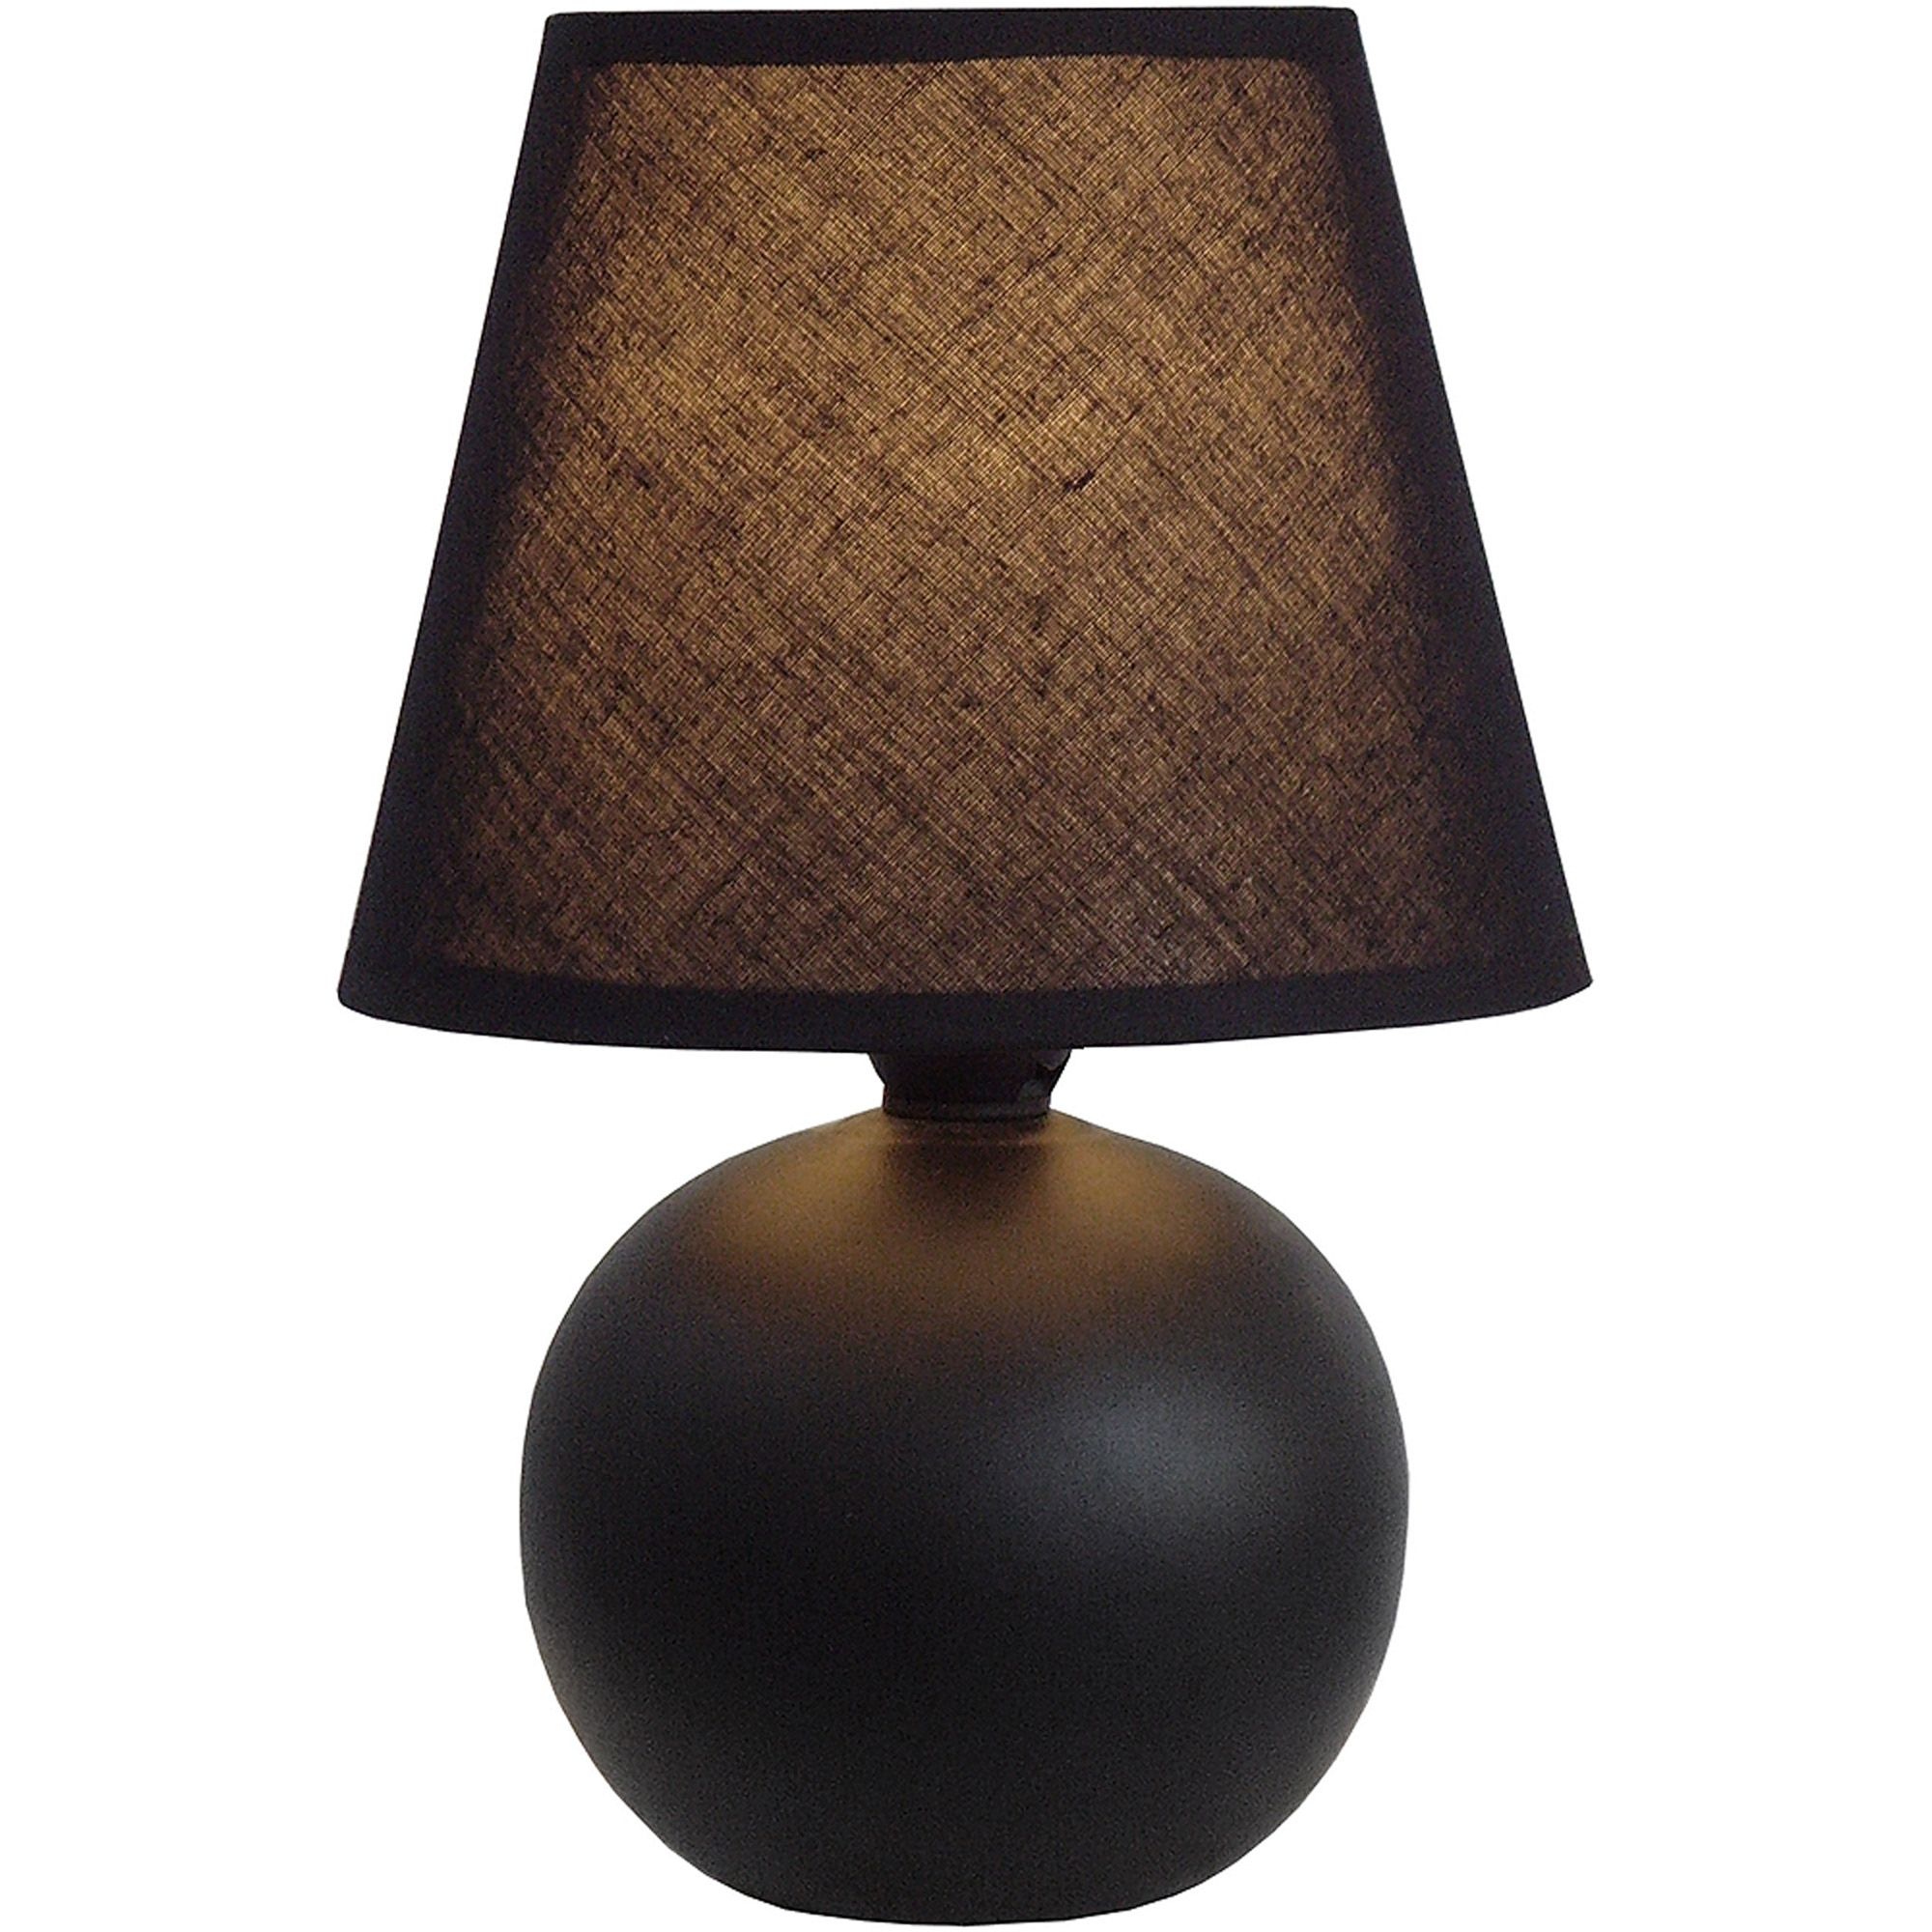 Simple Designs Mini Ceramic Globe Table Lamp, Black Pertaining To Walmart Living Room Table Lamps (View 3 of 15)